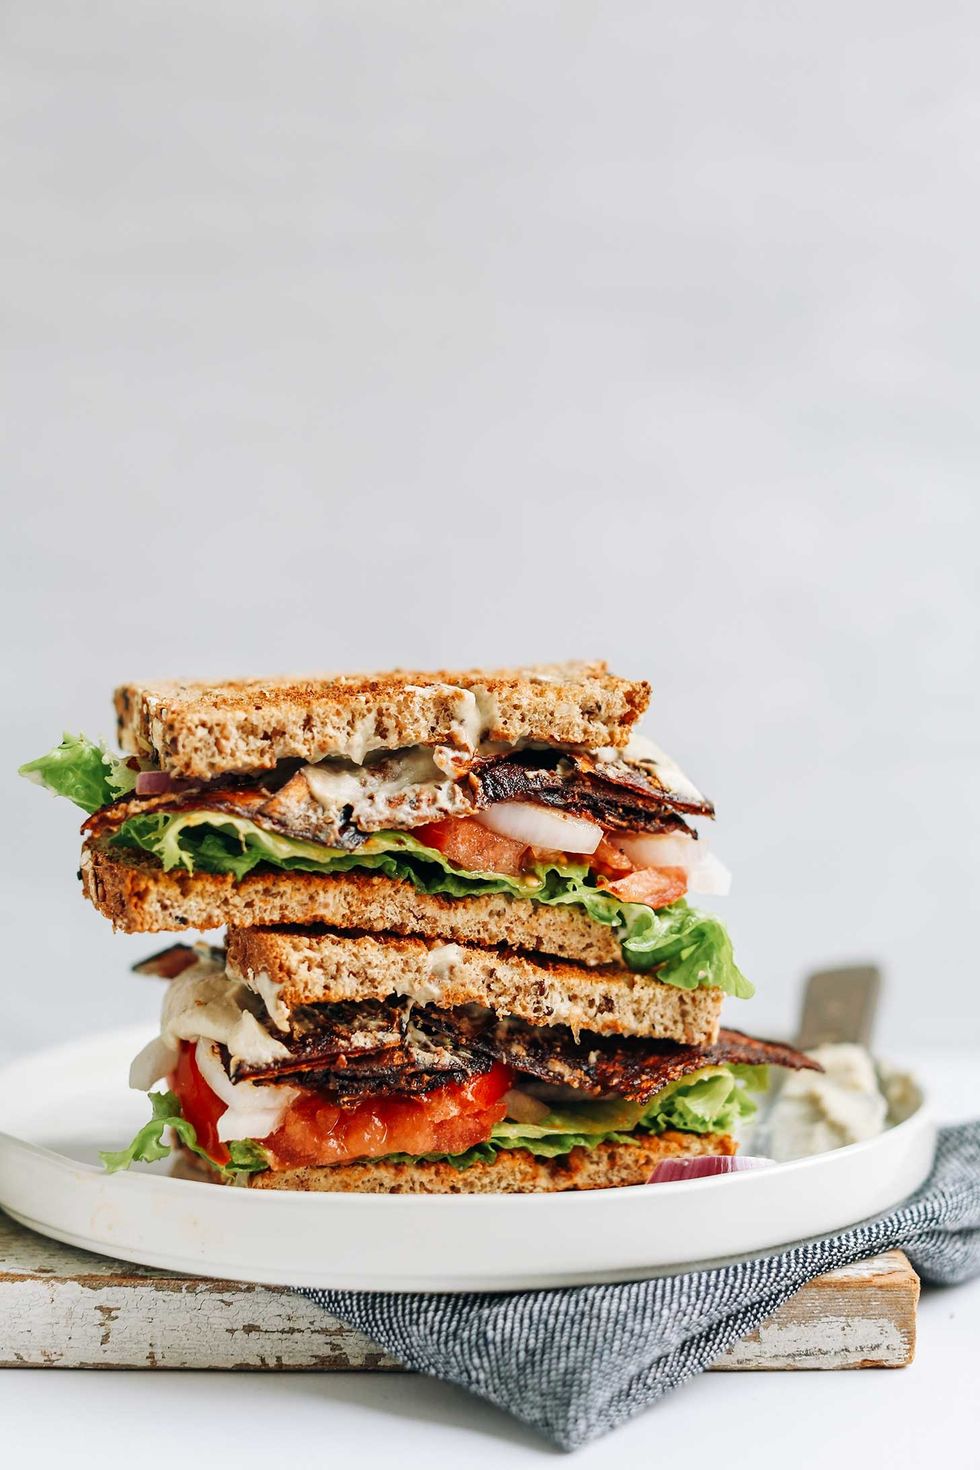 Stacked Vegan BLT Sandwich halves for a satisfying vegan lunch